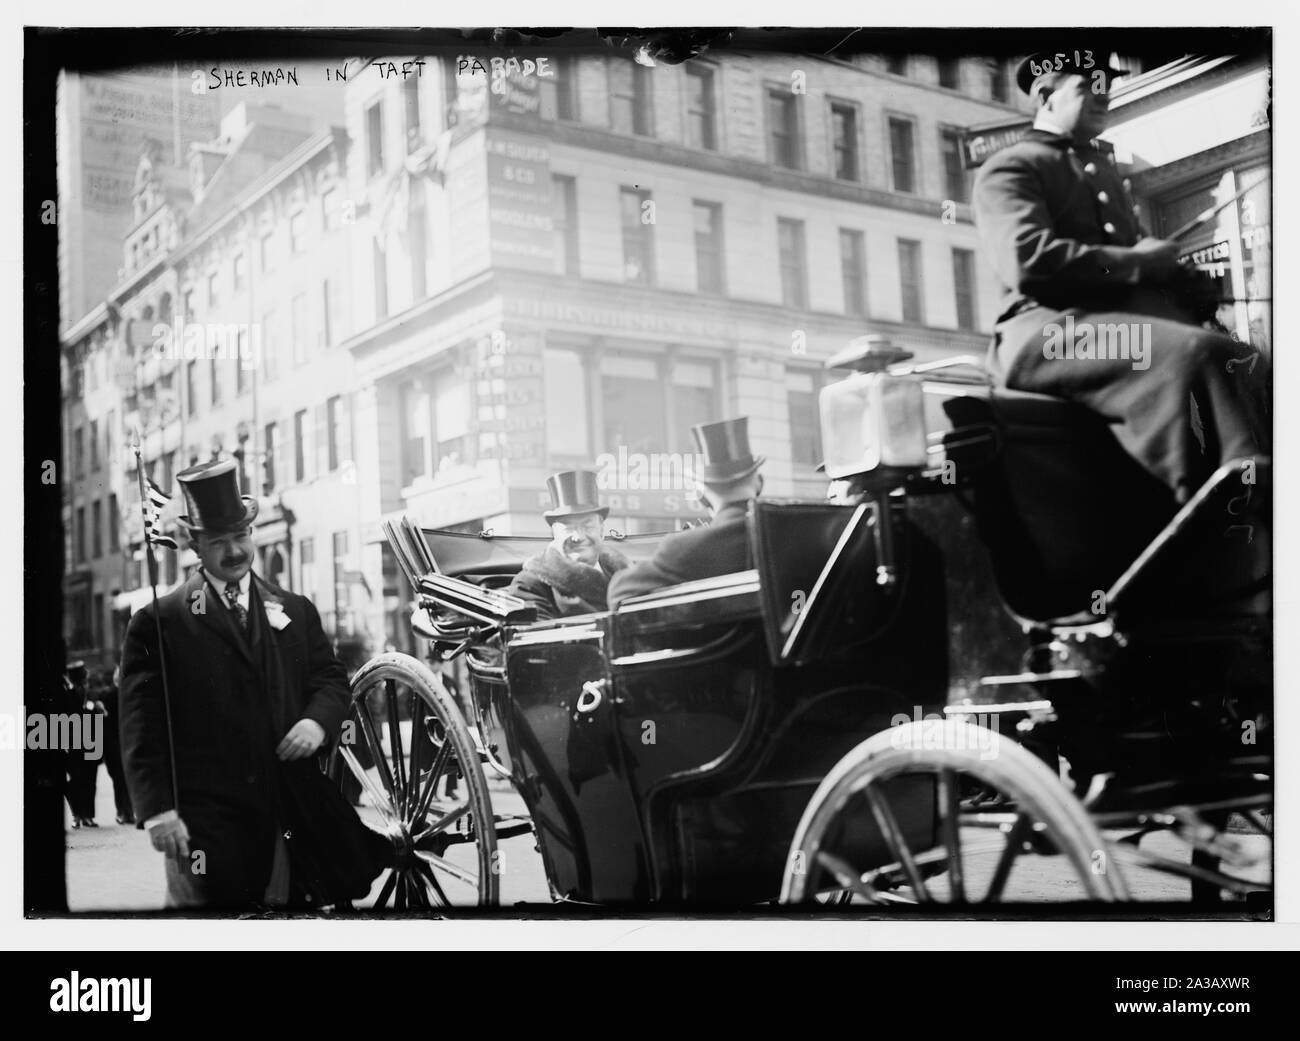 Sherman in Taft Parade [New York] Stock Photo